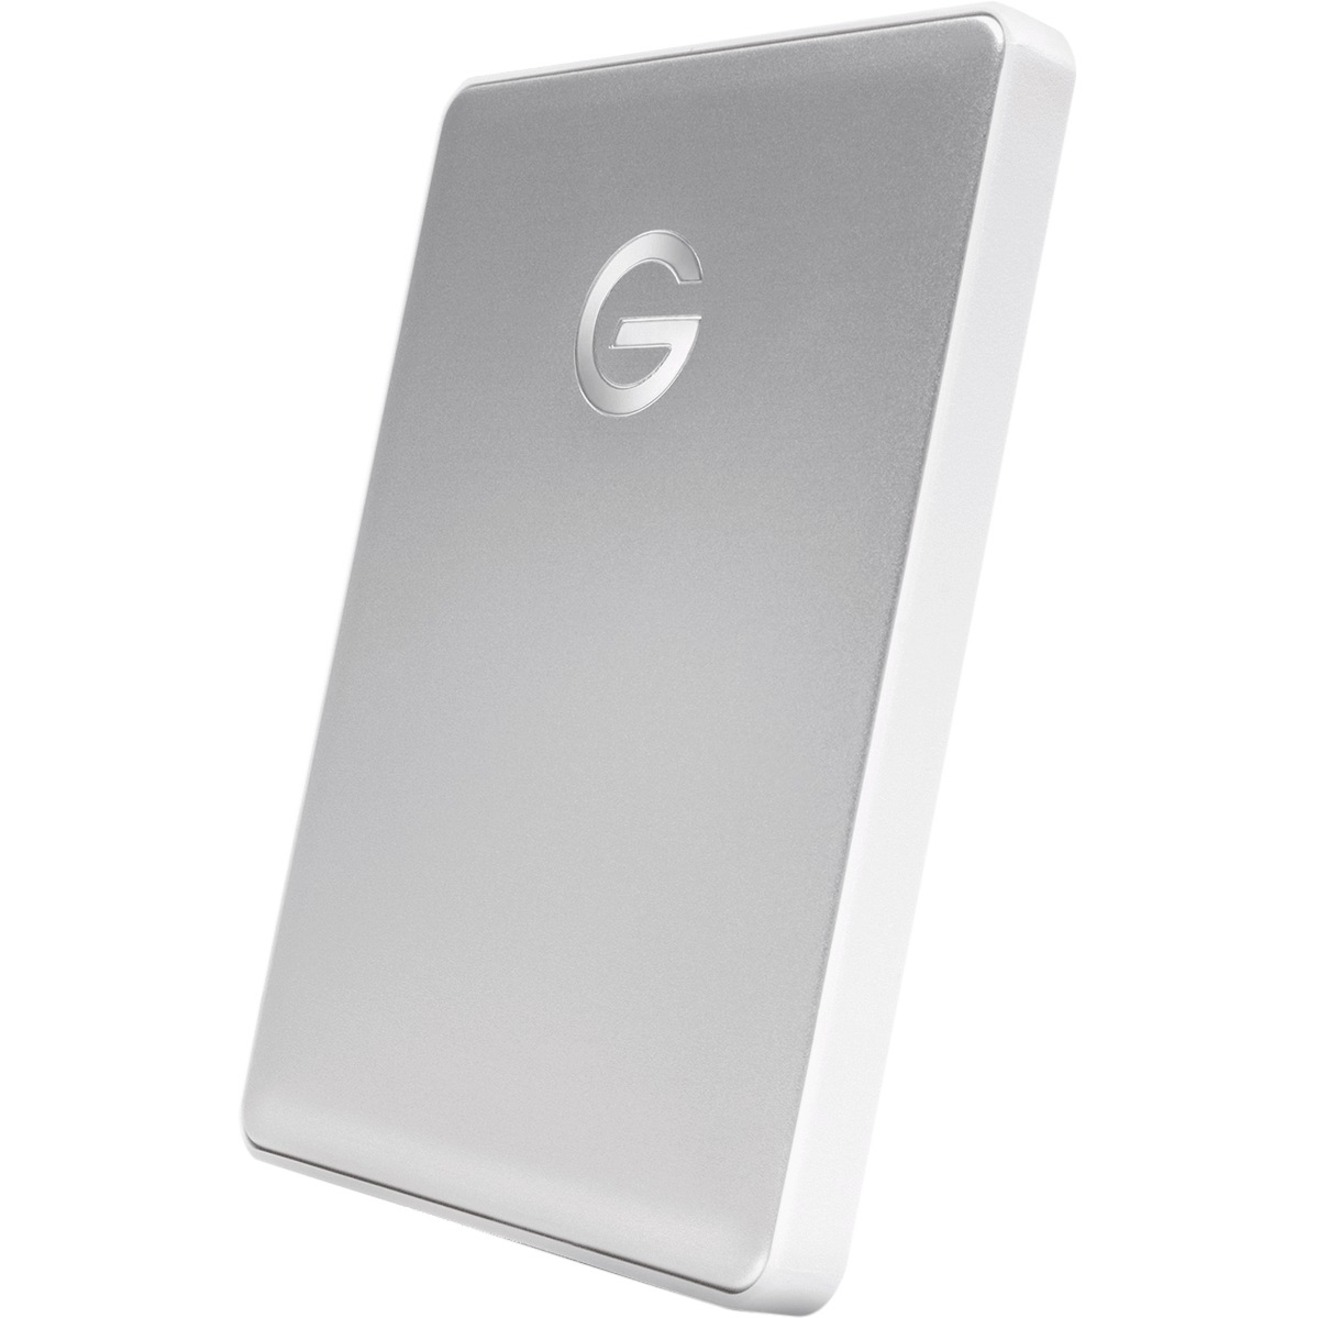 G-Technology G-DRIVE mobile USB-C 0G10339-1 2 TB Portable Hard Drive, 2.5" External, Silver - image 5 of 9